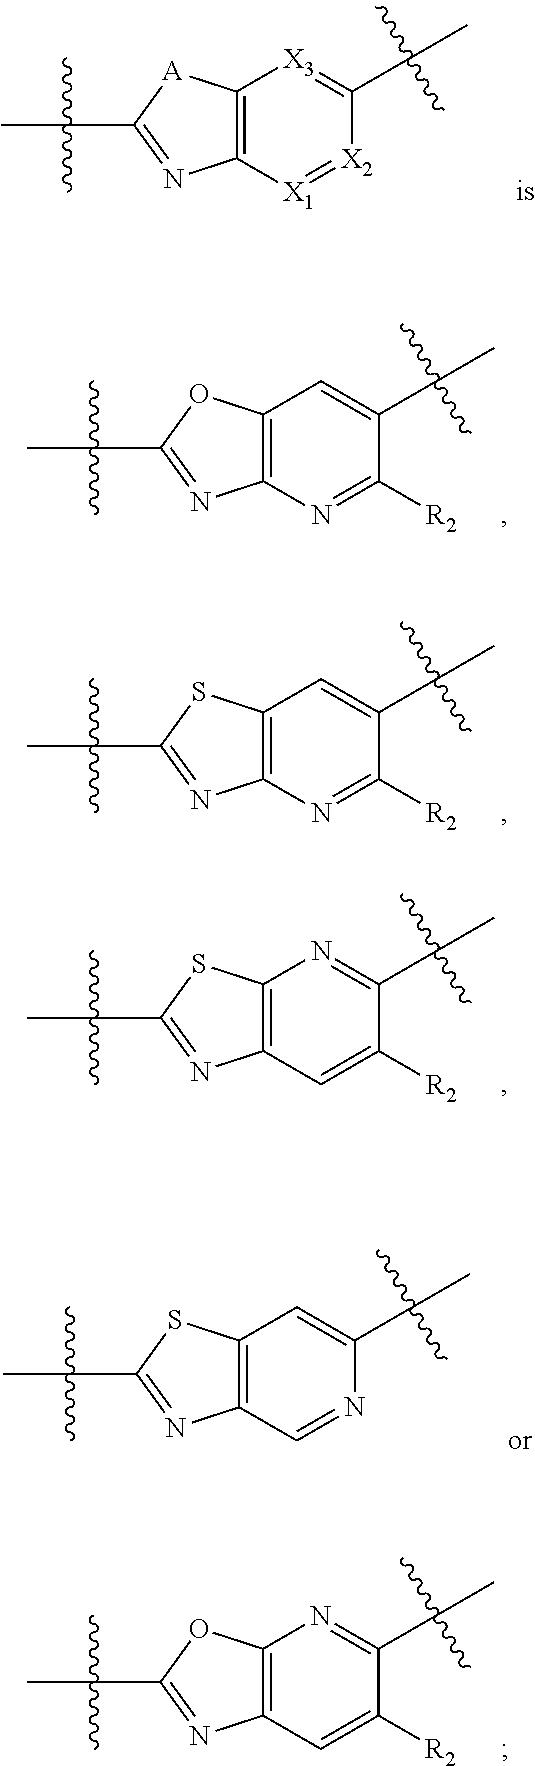 Bicyclic heterocyclyl derivates as irak4 inhibitors